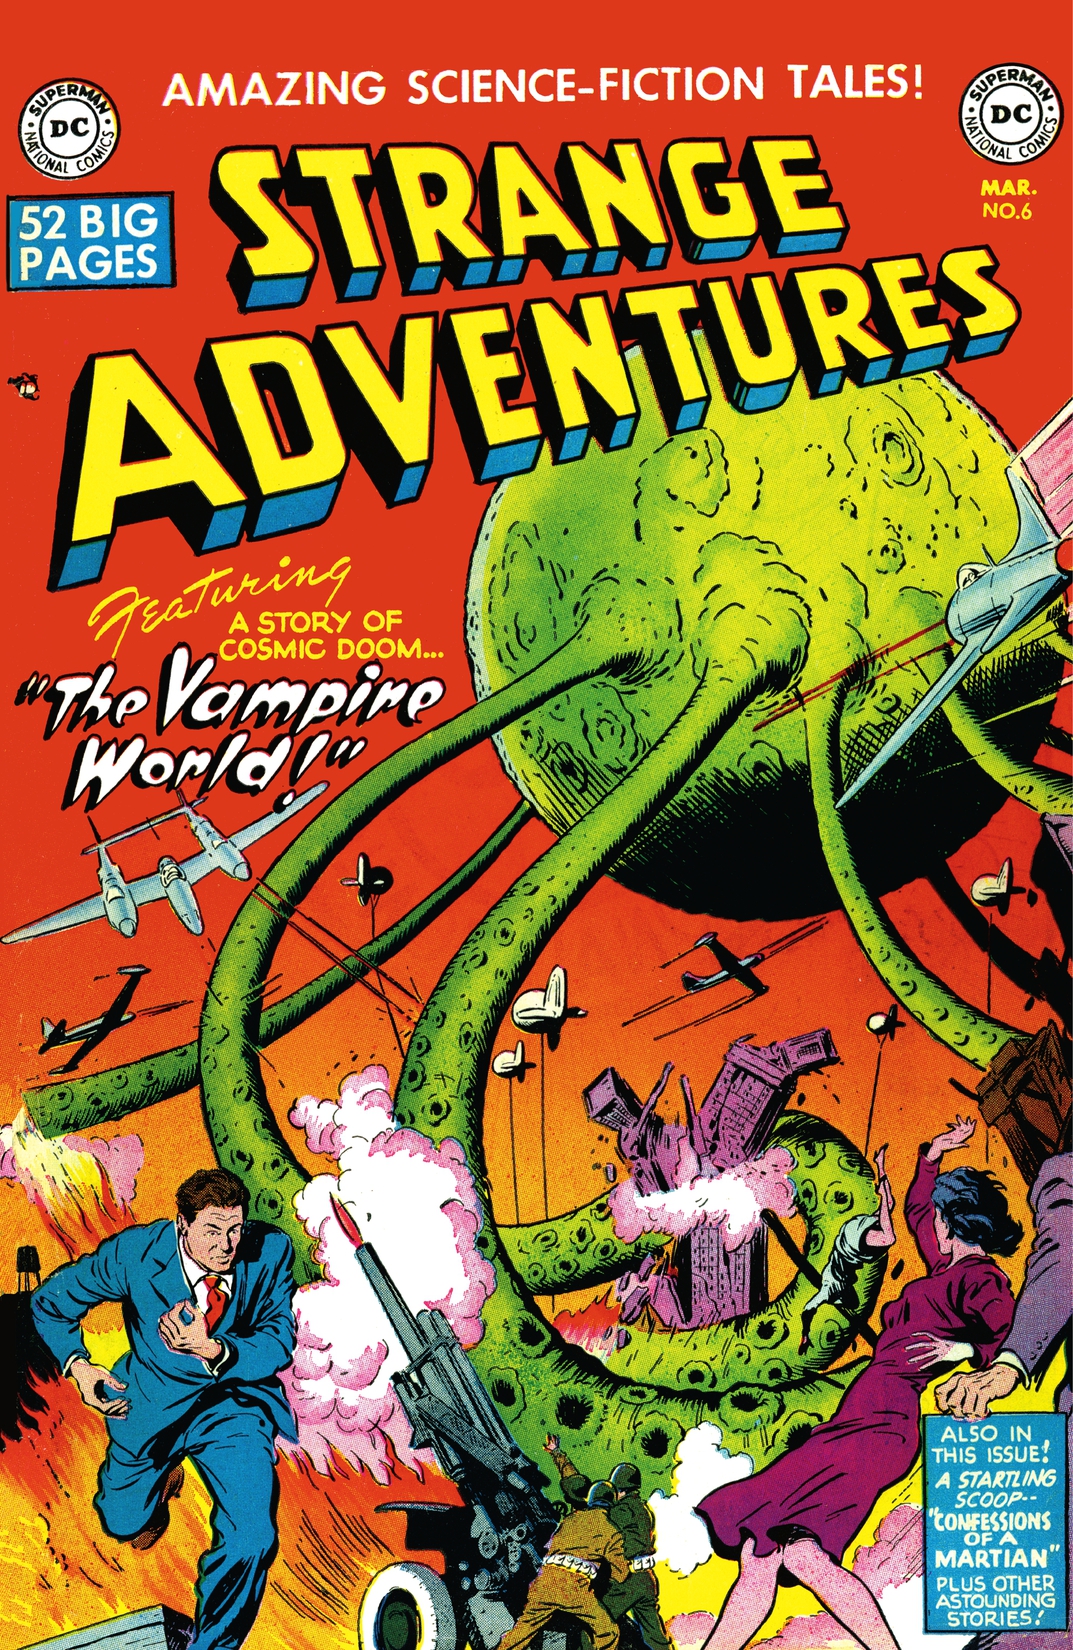 Strange Adventures (1950-1973) #6 preview images